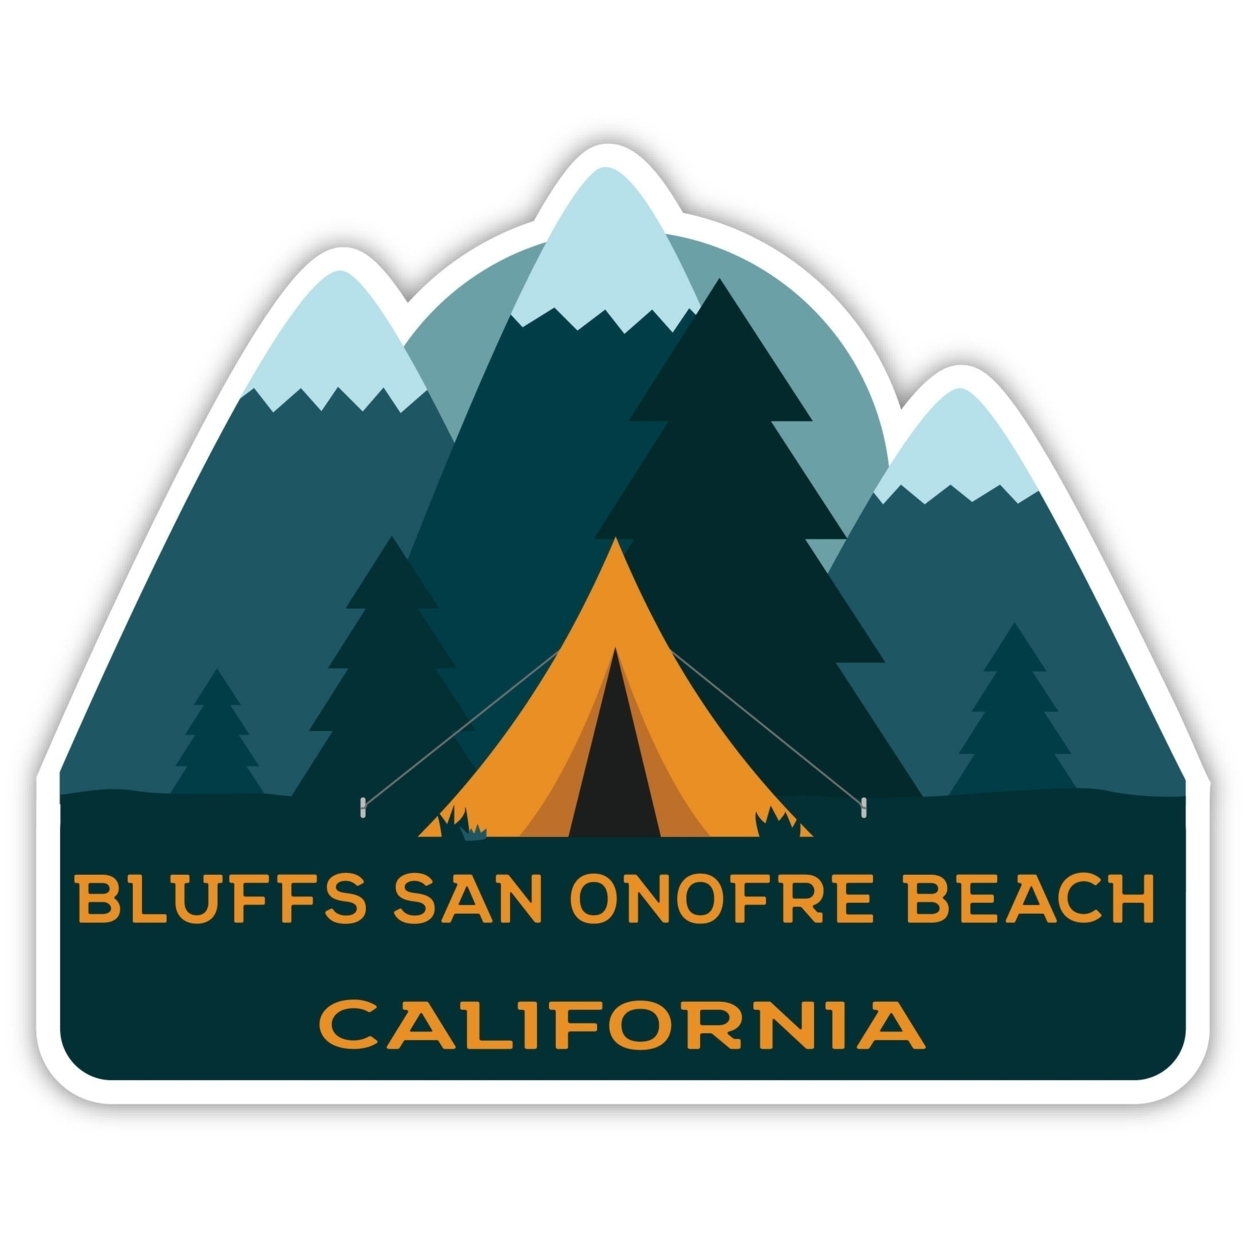 Bluffs San Onofre Beach California Souvenir Decorative Stickers (Choose Theme And Size) - Single Unit, 6-Inch, Tent